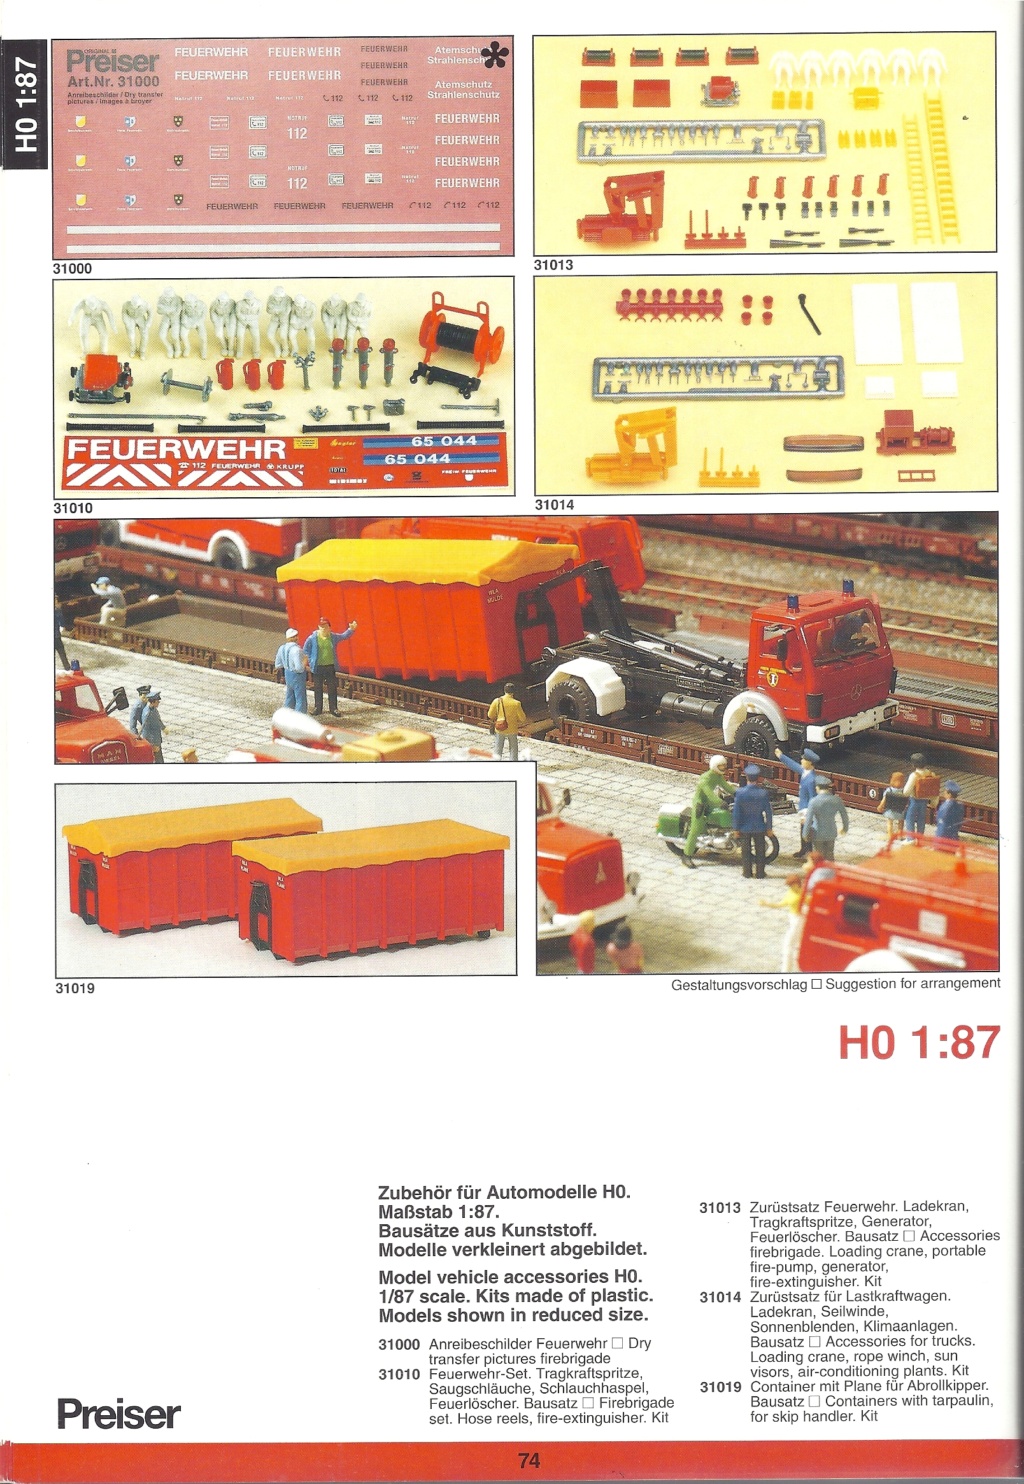 preiser - [PREISER 1996] Catalogue K22 1996 Preis966